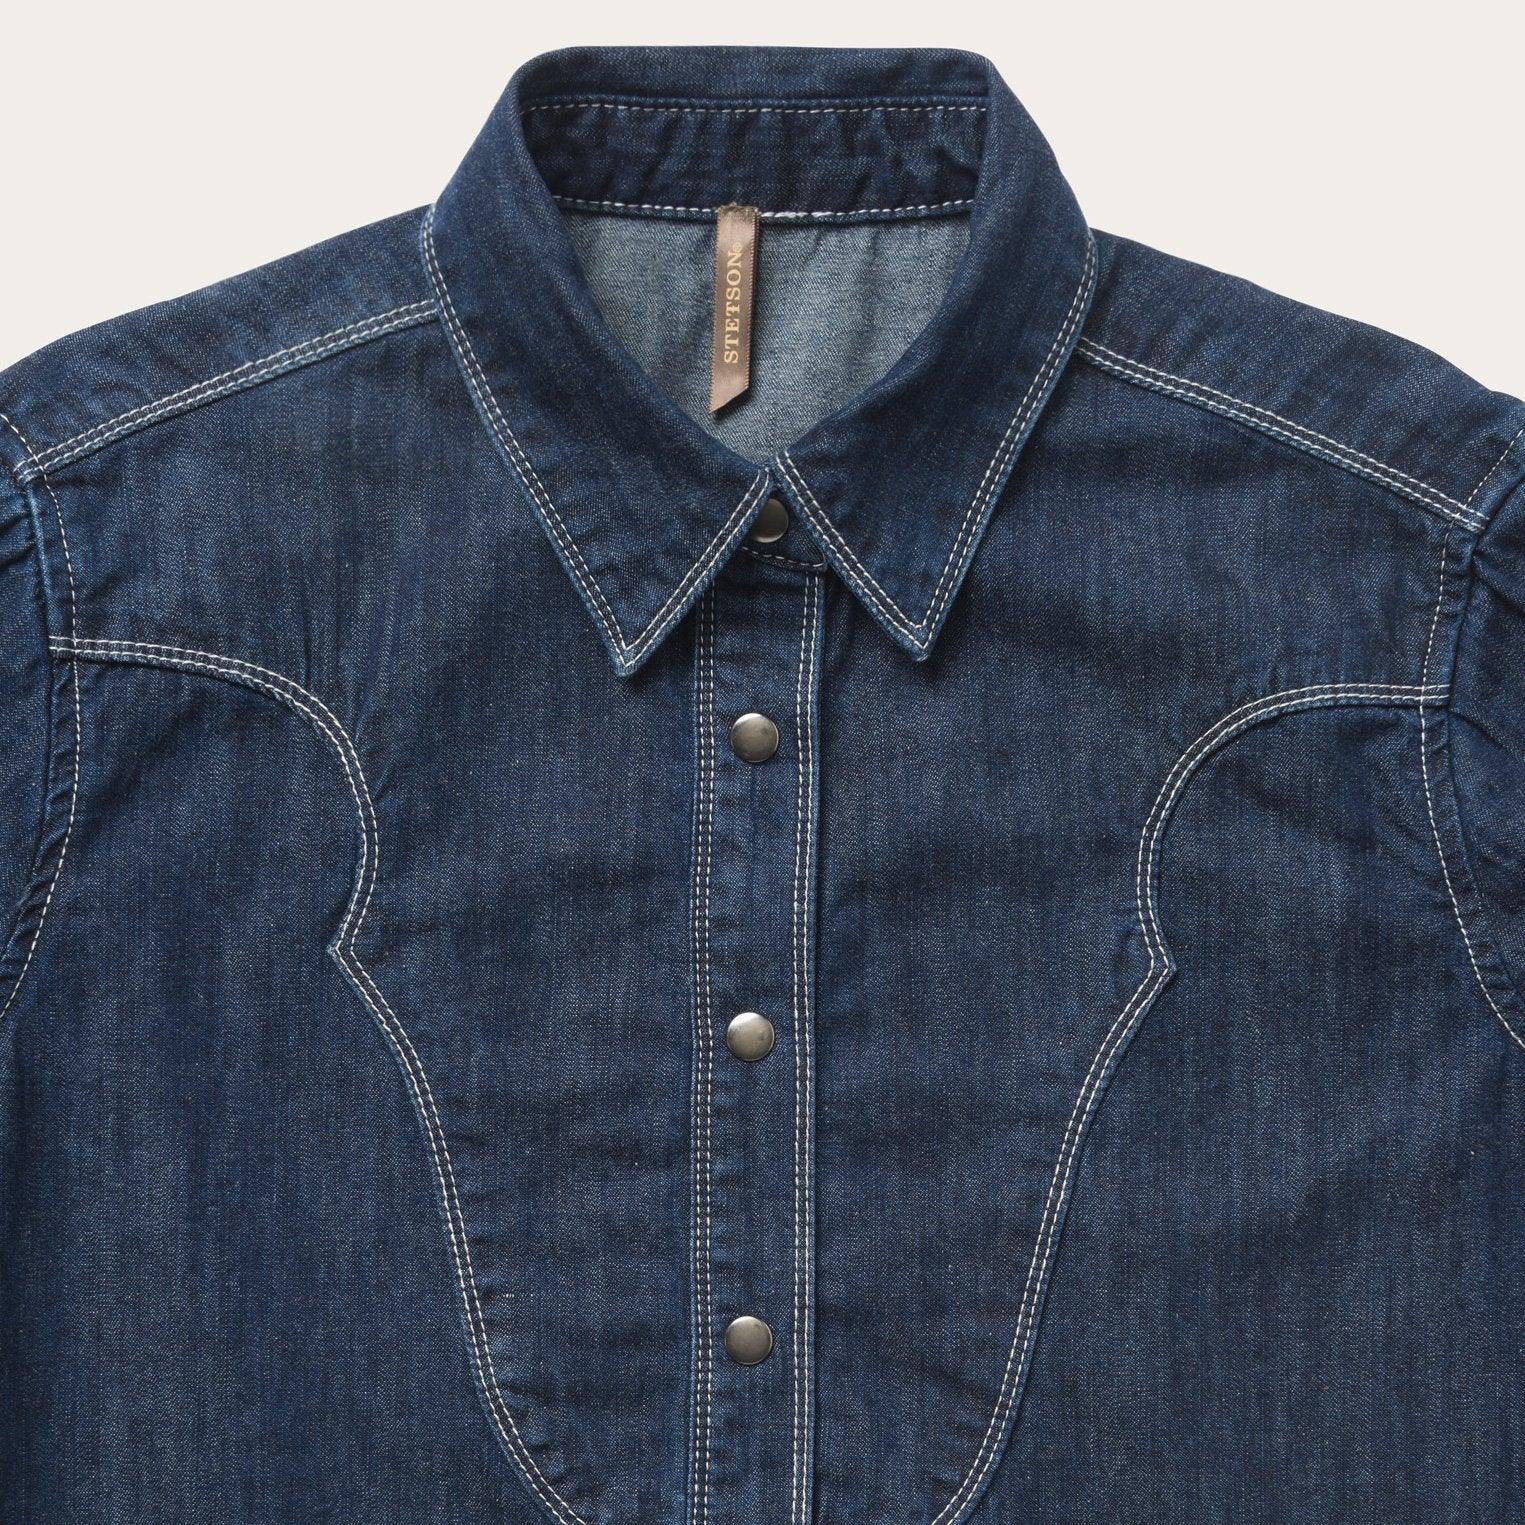 Stetson Dark Denim Vintage Western Shirt - Flyclothing LLC